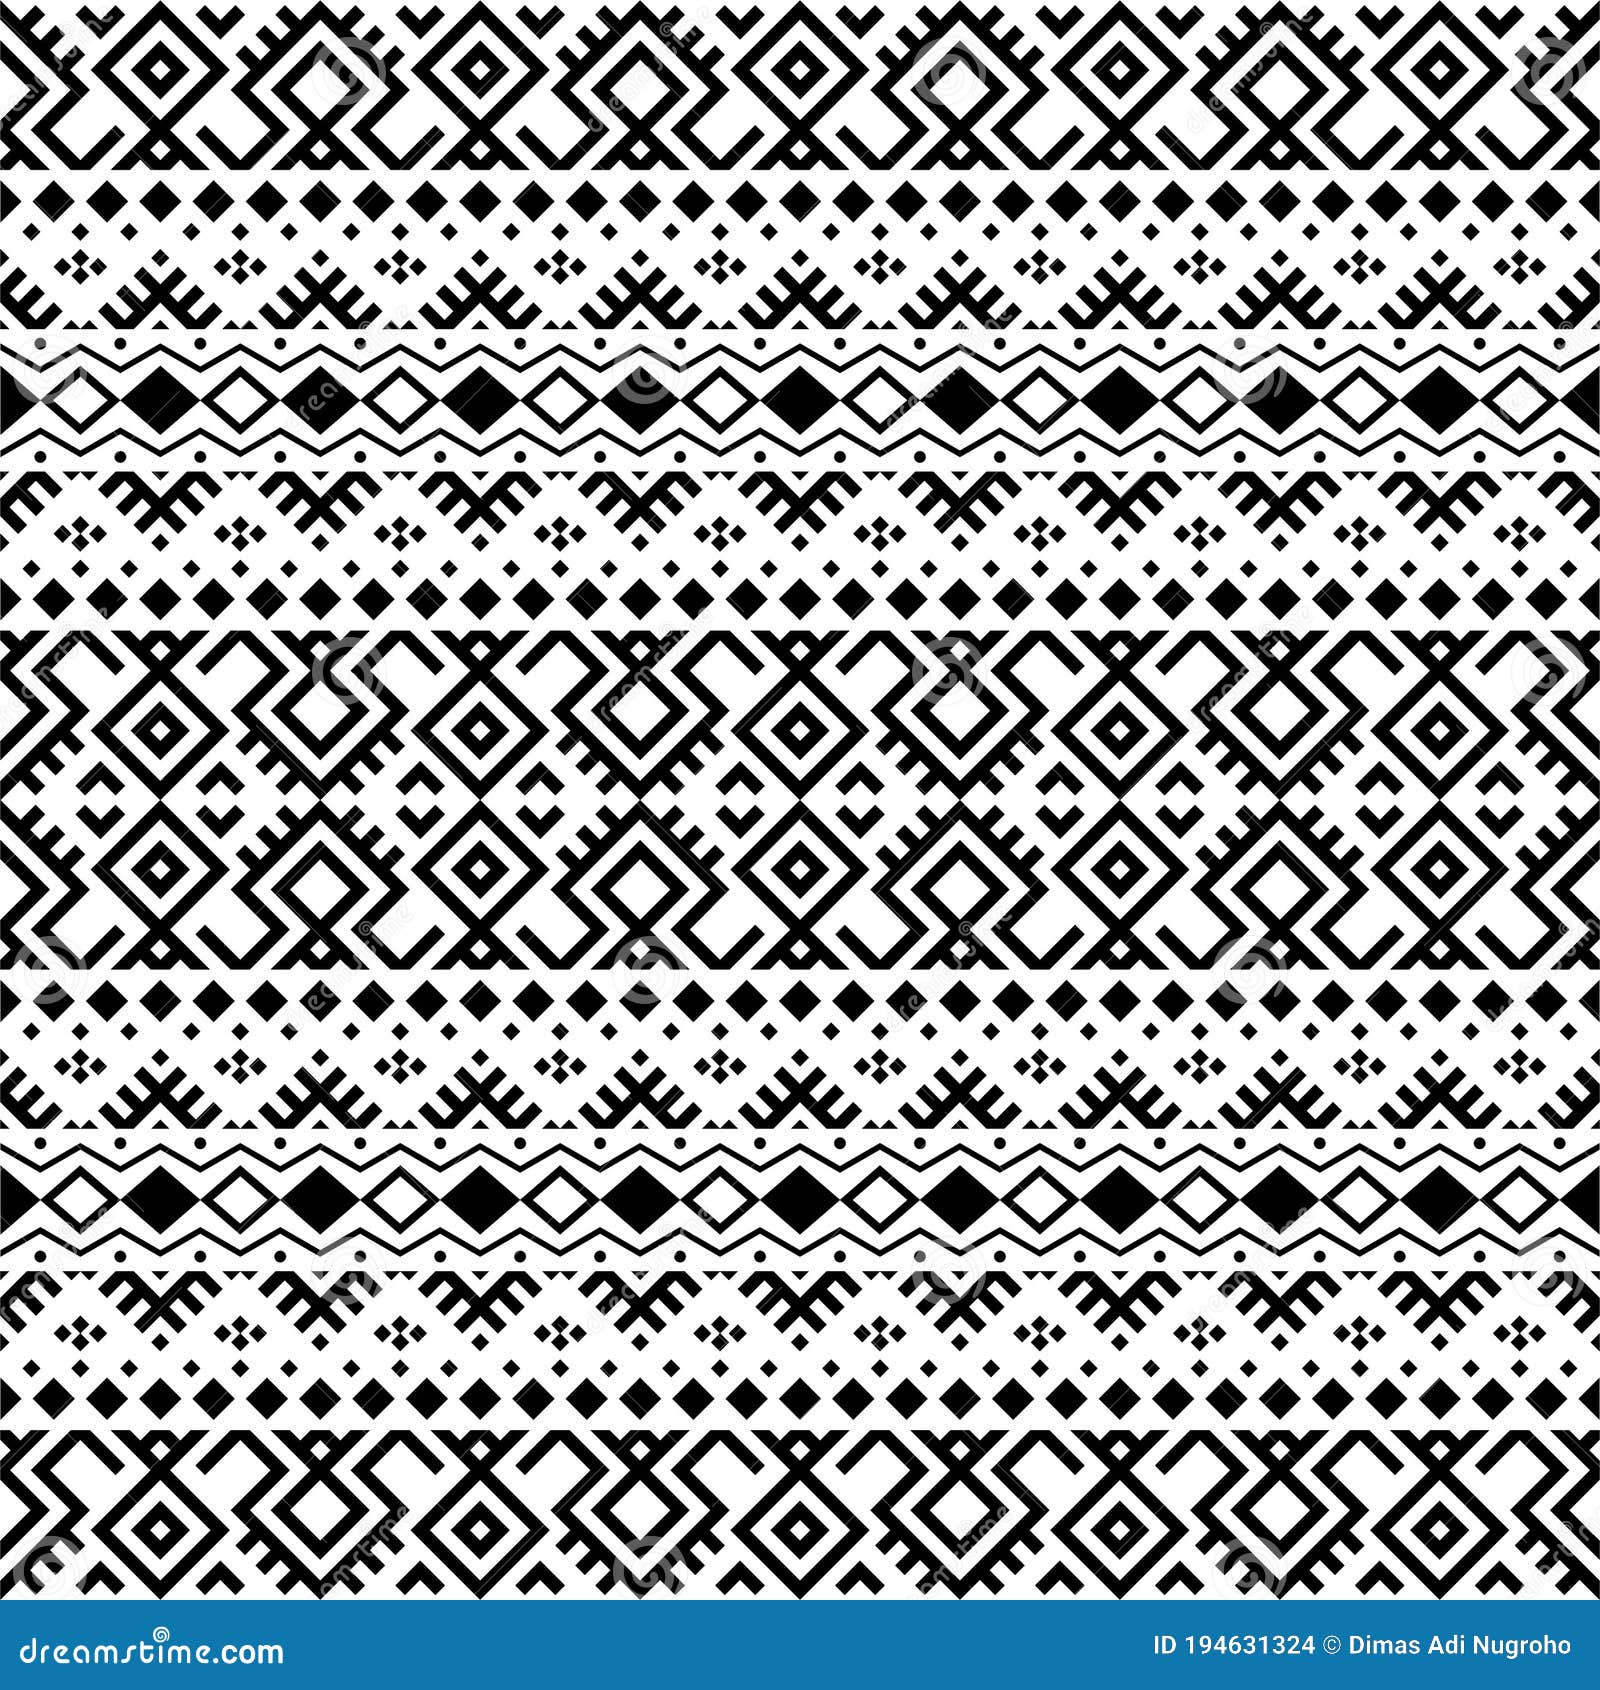 Monochrome Ethnic Pattern Illustration Design Texture Background in ...